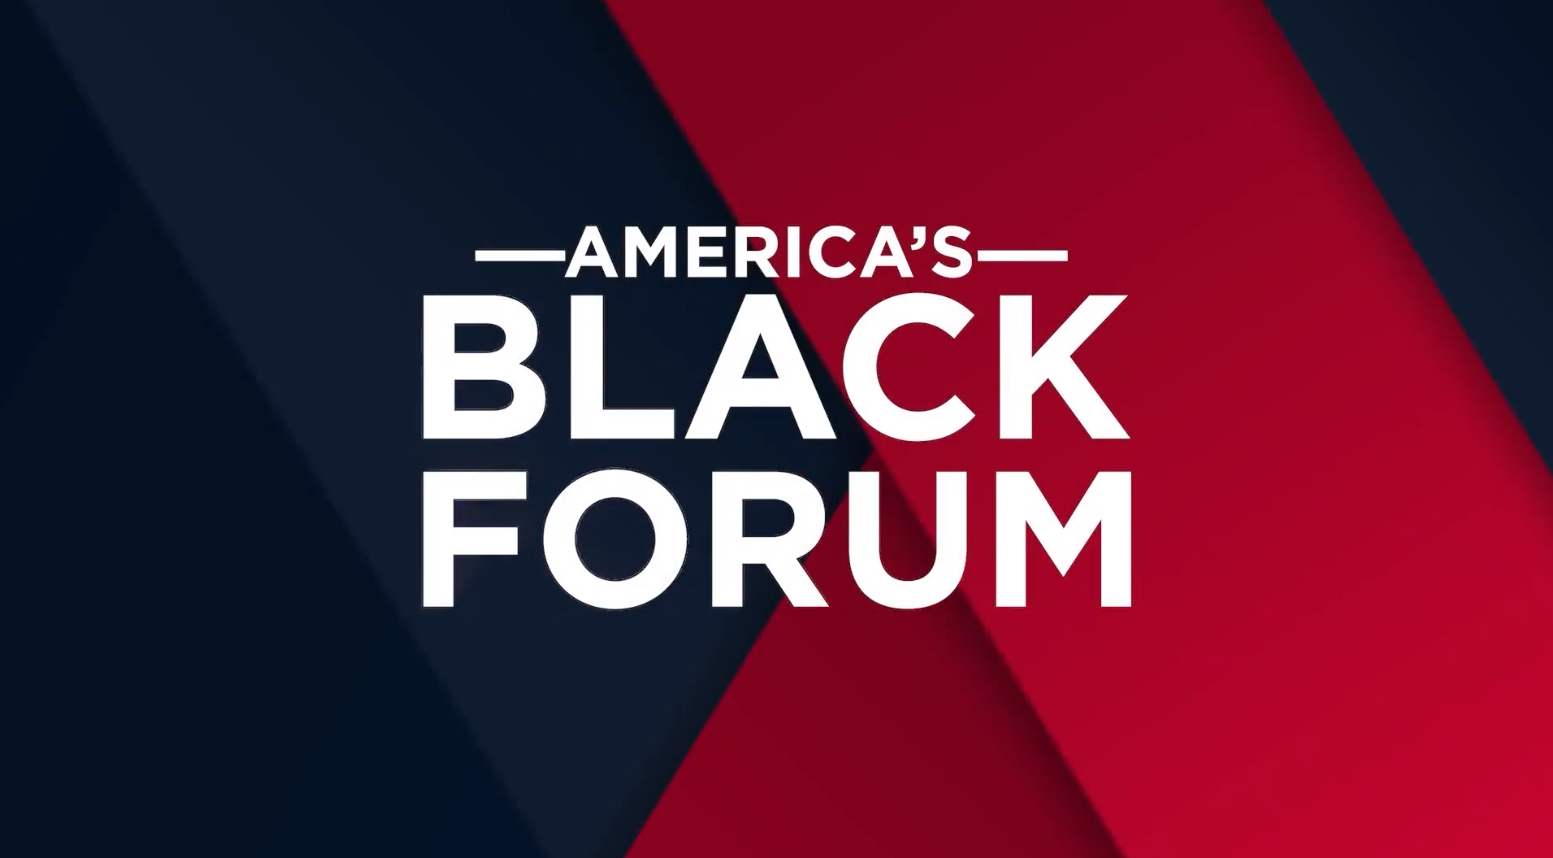 Michael Marshall Featured on America’s Black Forum